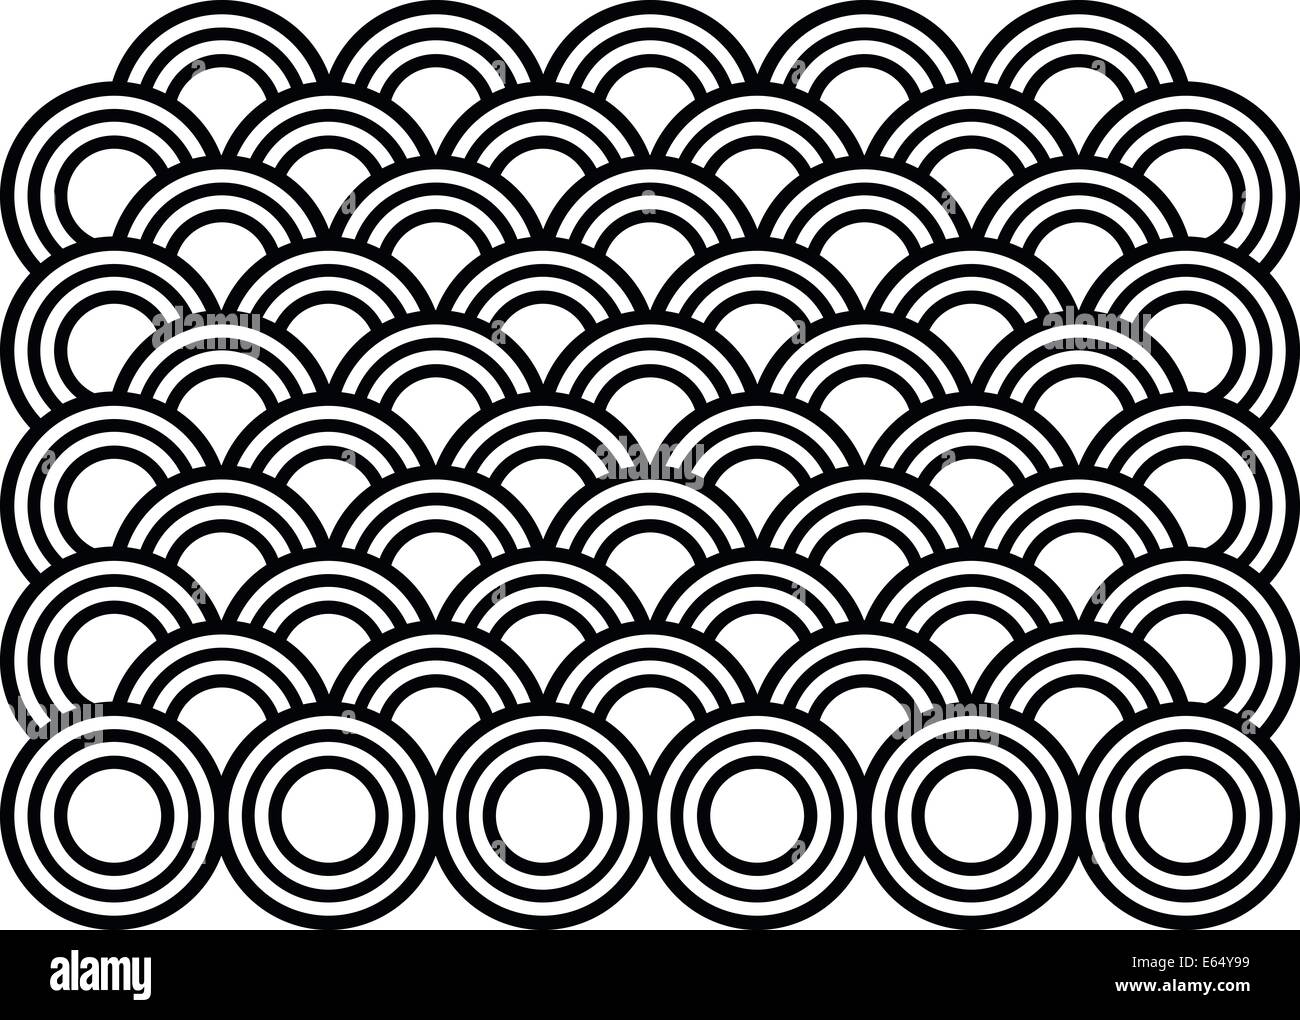 Retro-Muster Entwicklungskonzeption Retromuster Schwarz Weiß Muster Abstrakt Kunst Artwort Illustration Comicstrips Vektor Vektorgrafik Grafik Stockfoto